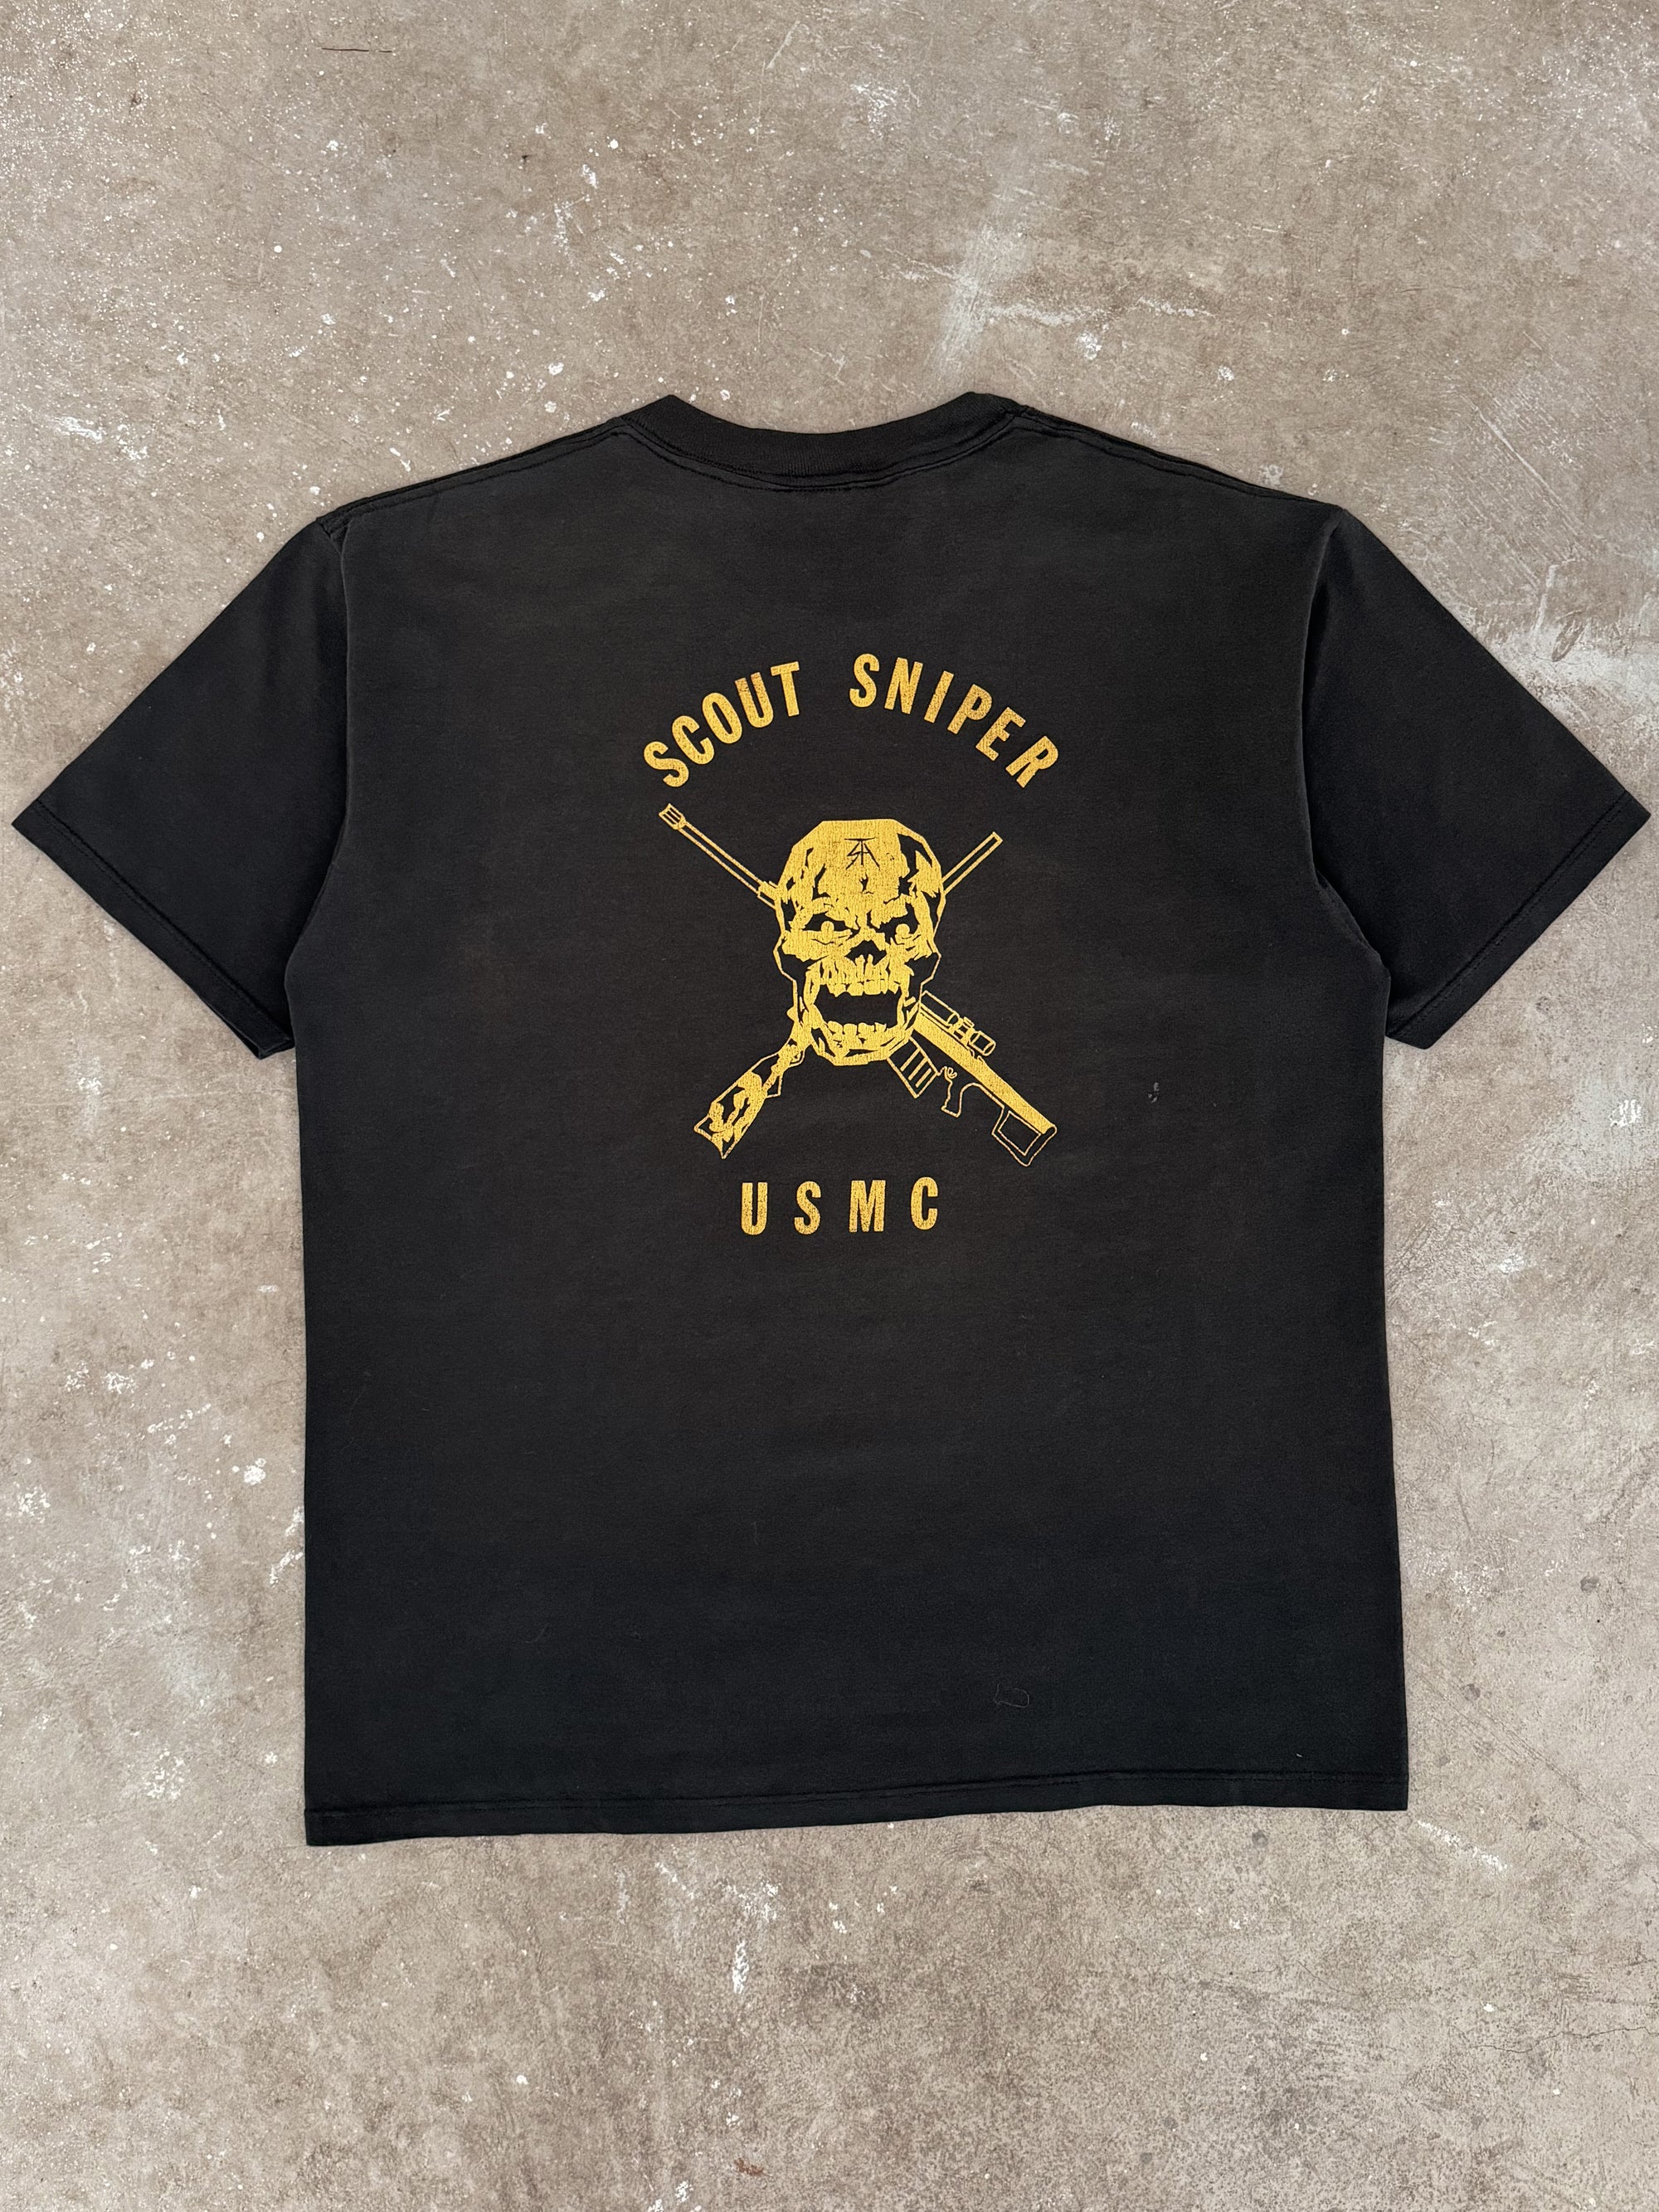 1990s "Scout Sniper" Tee (L)